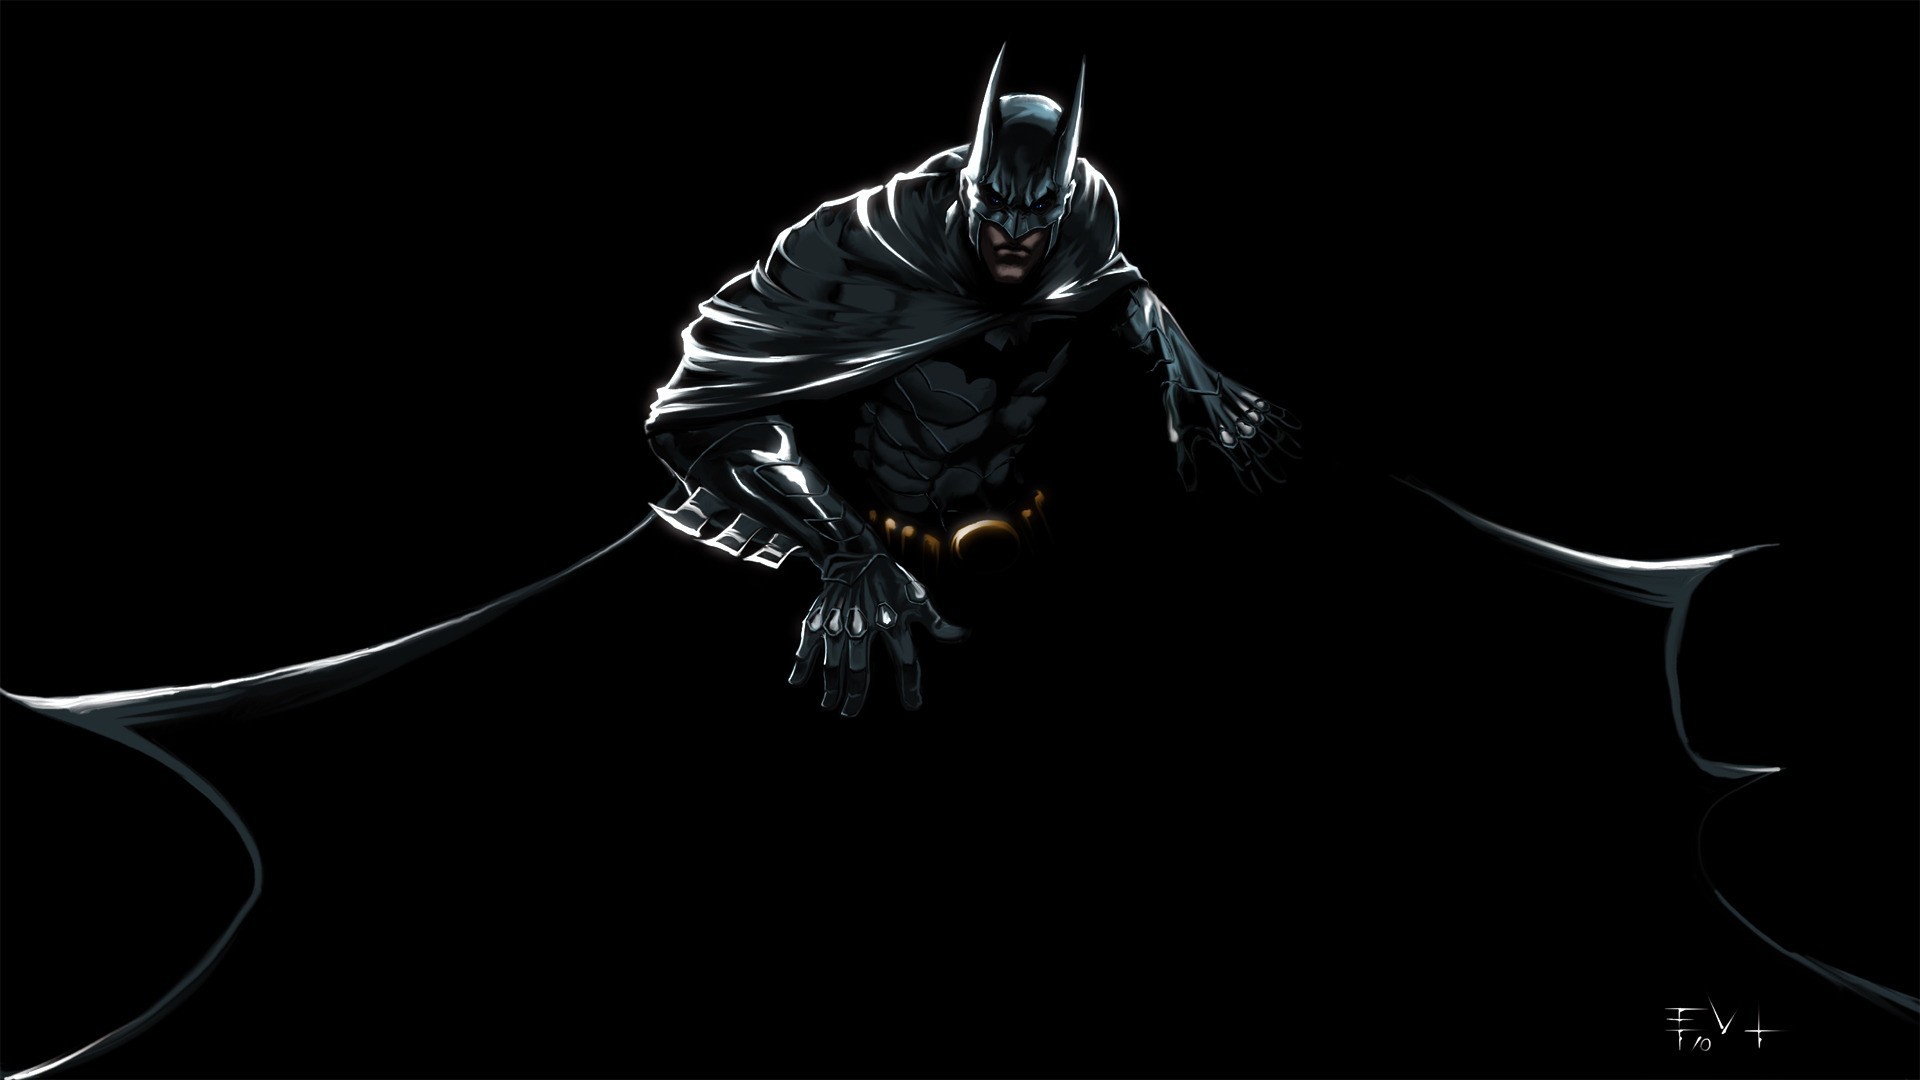 Cool Desktop Backgrounds Wallpaper on Batman Dc Comics Black Background Hd Wallpaper   Cartoon   Animation